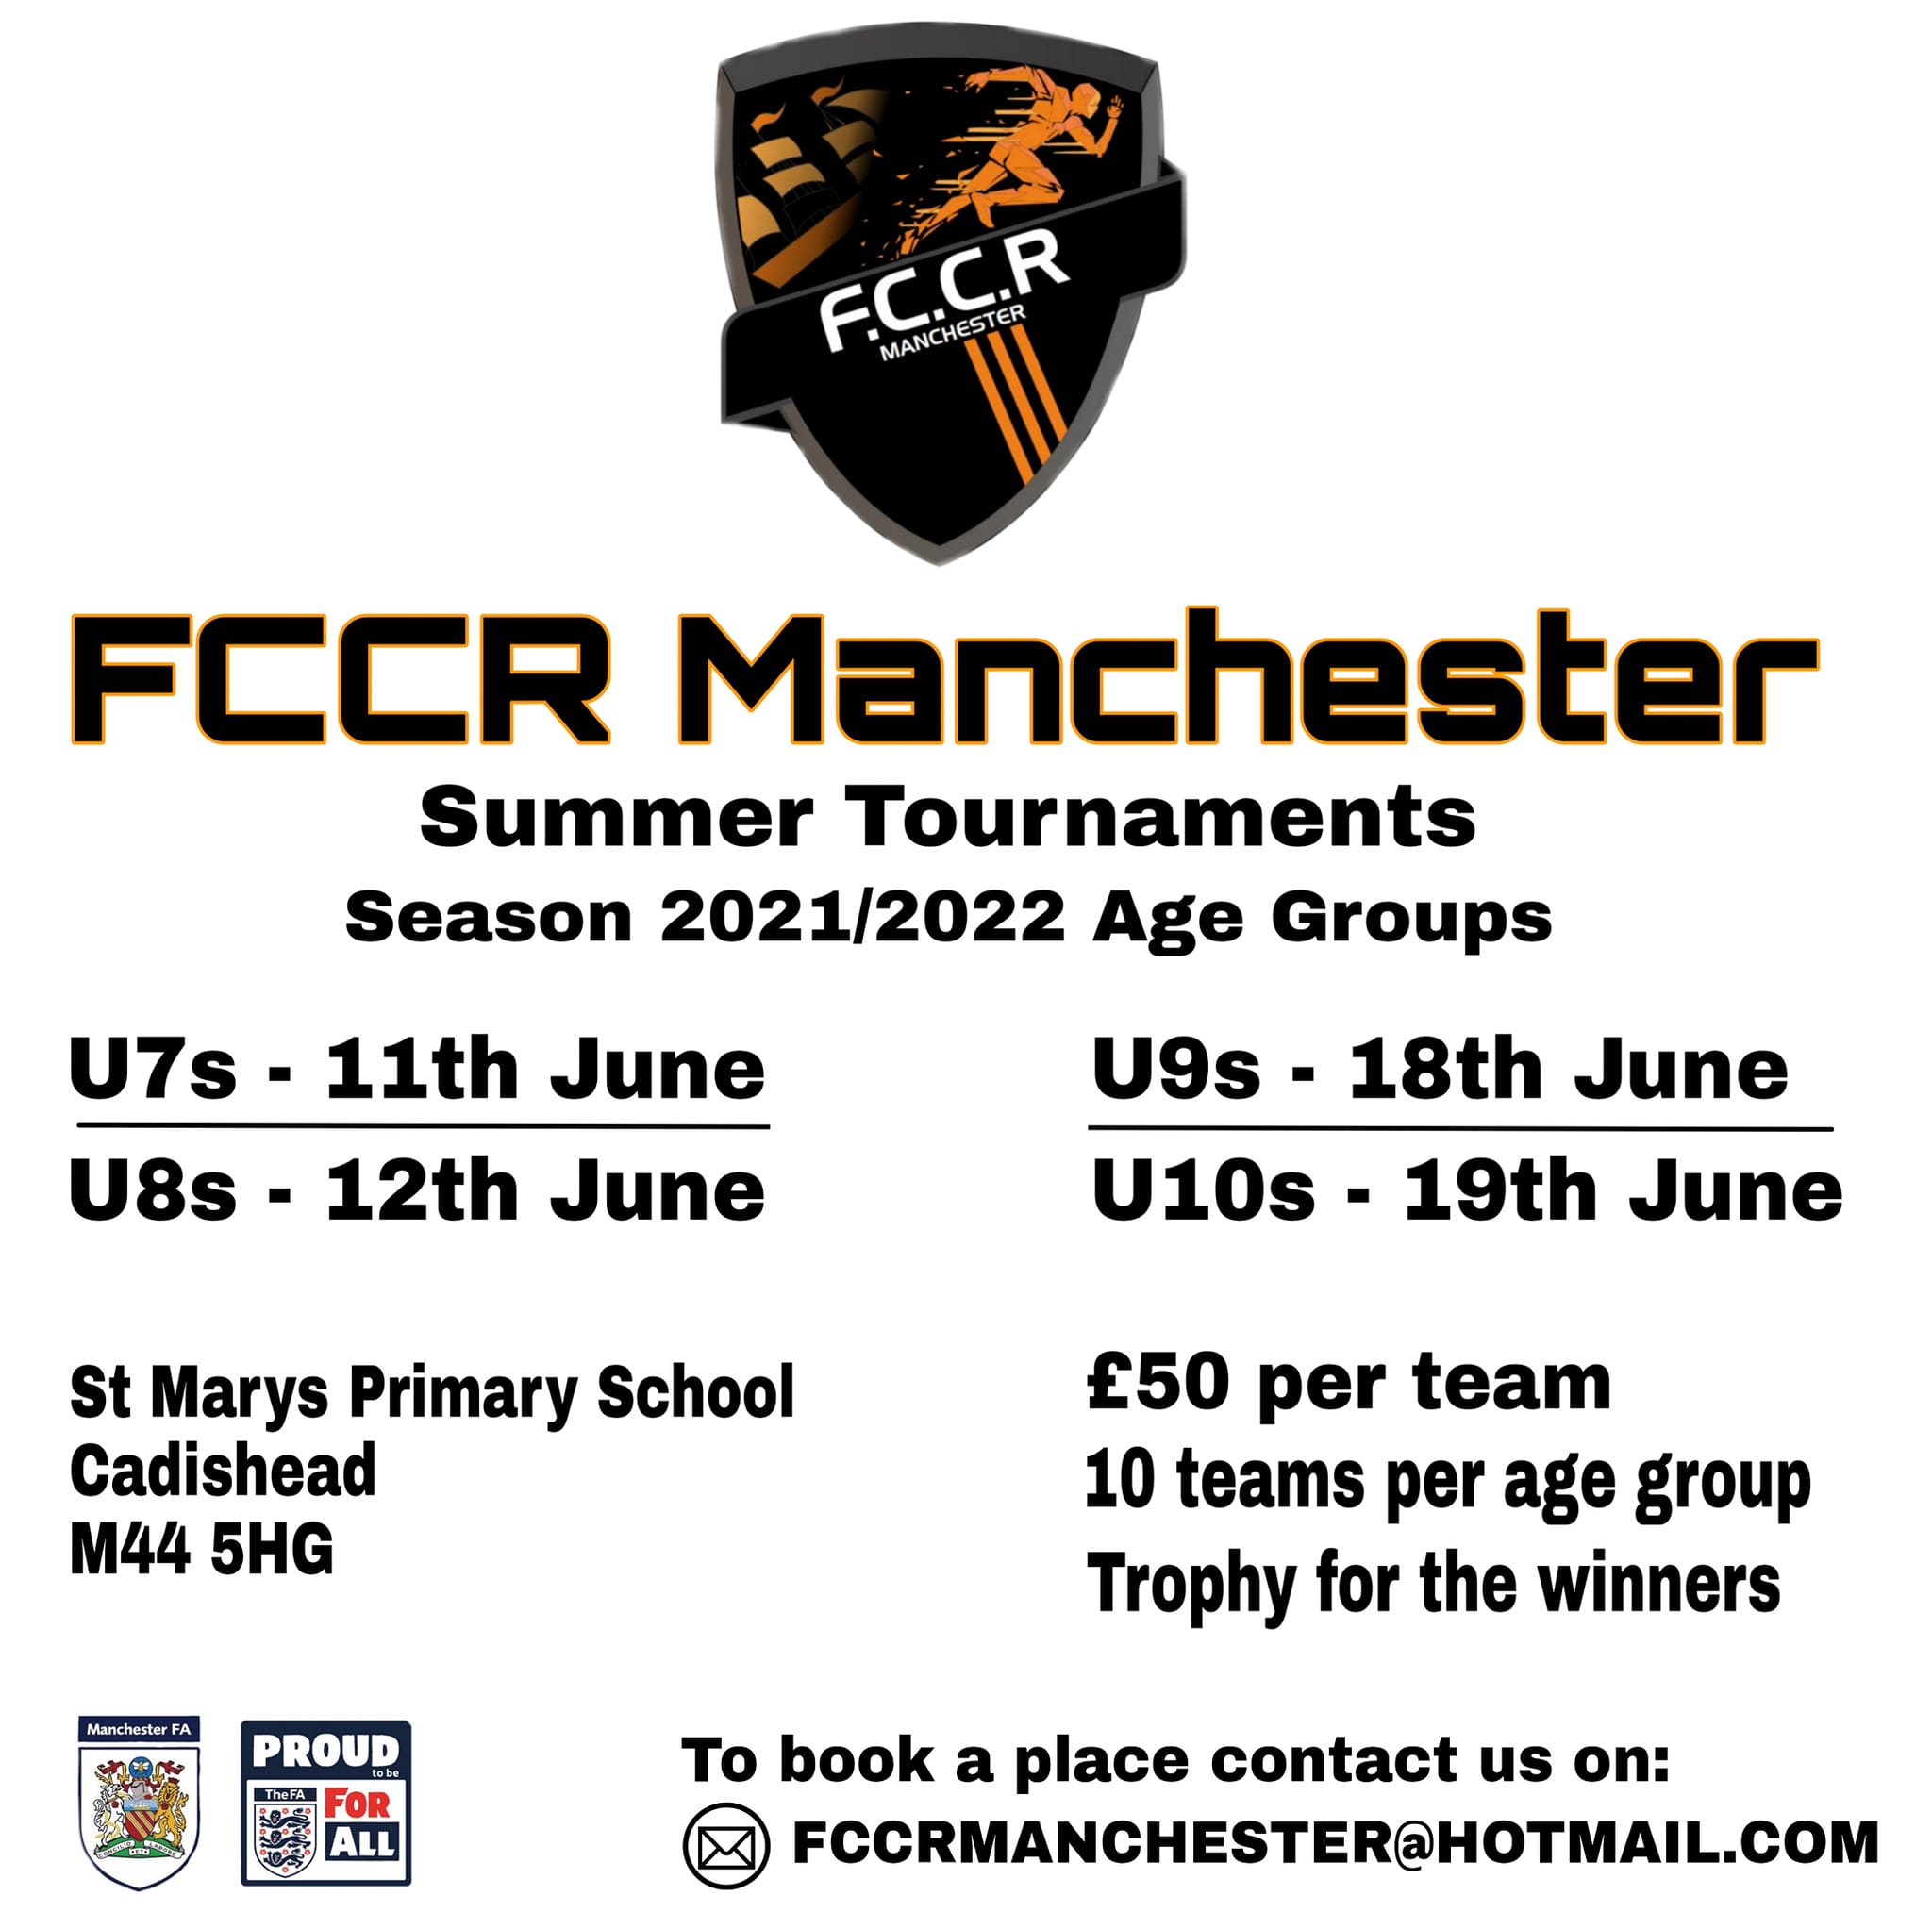 FCCR Manchester Summer Tournaments